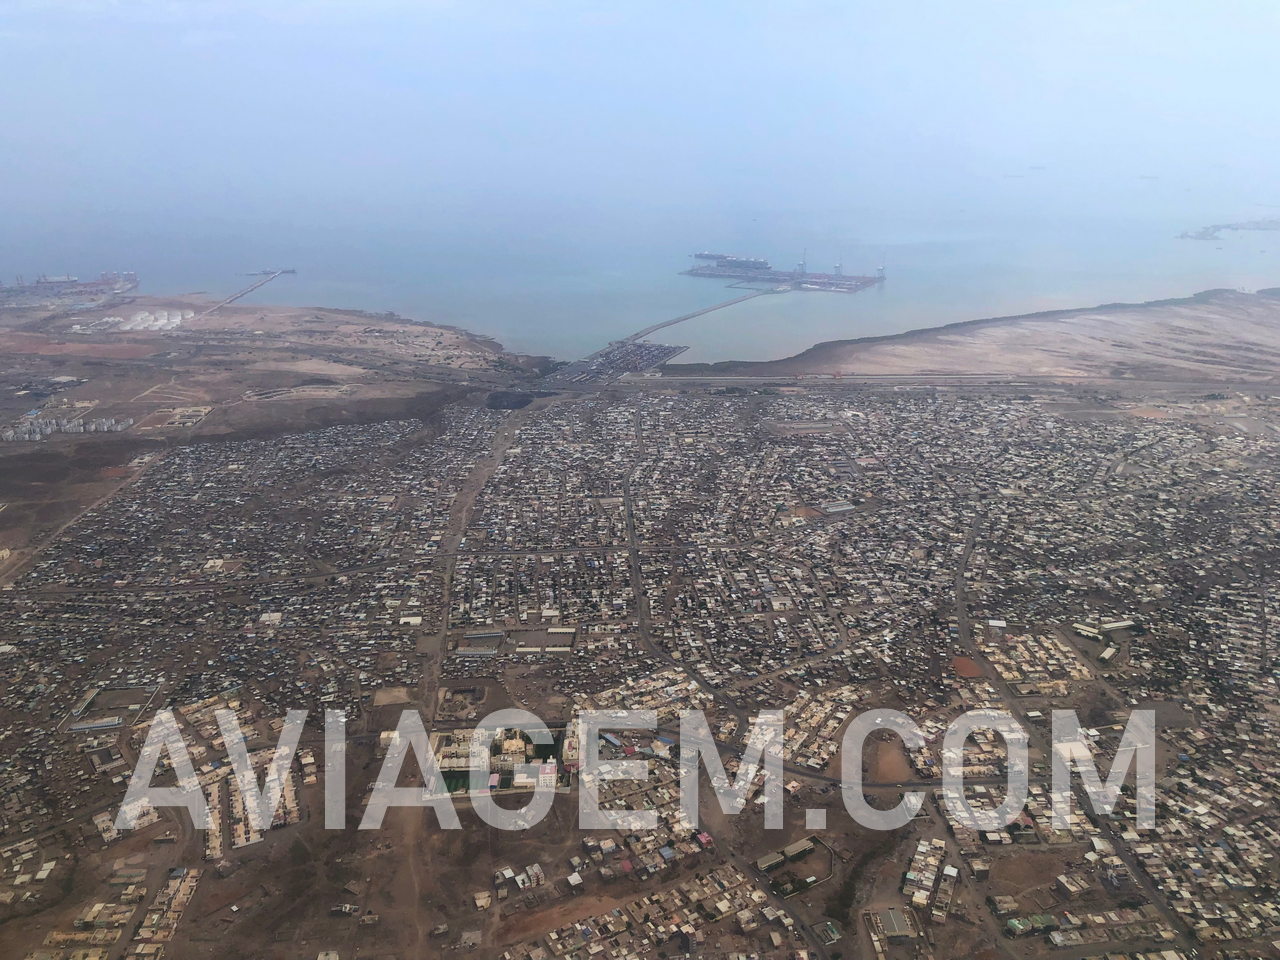 Djibouti, capital city of Djibouti